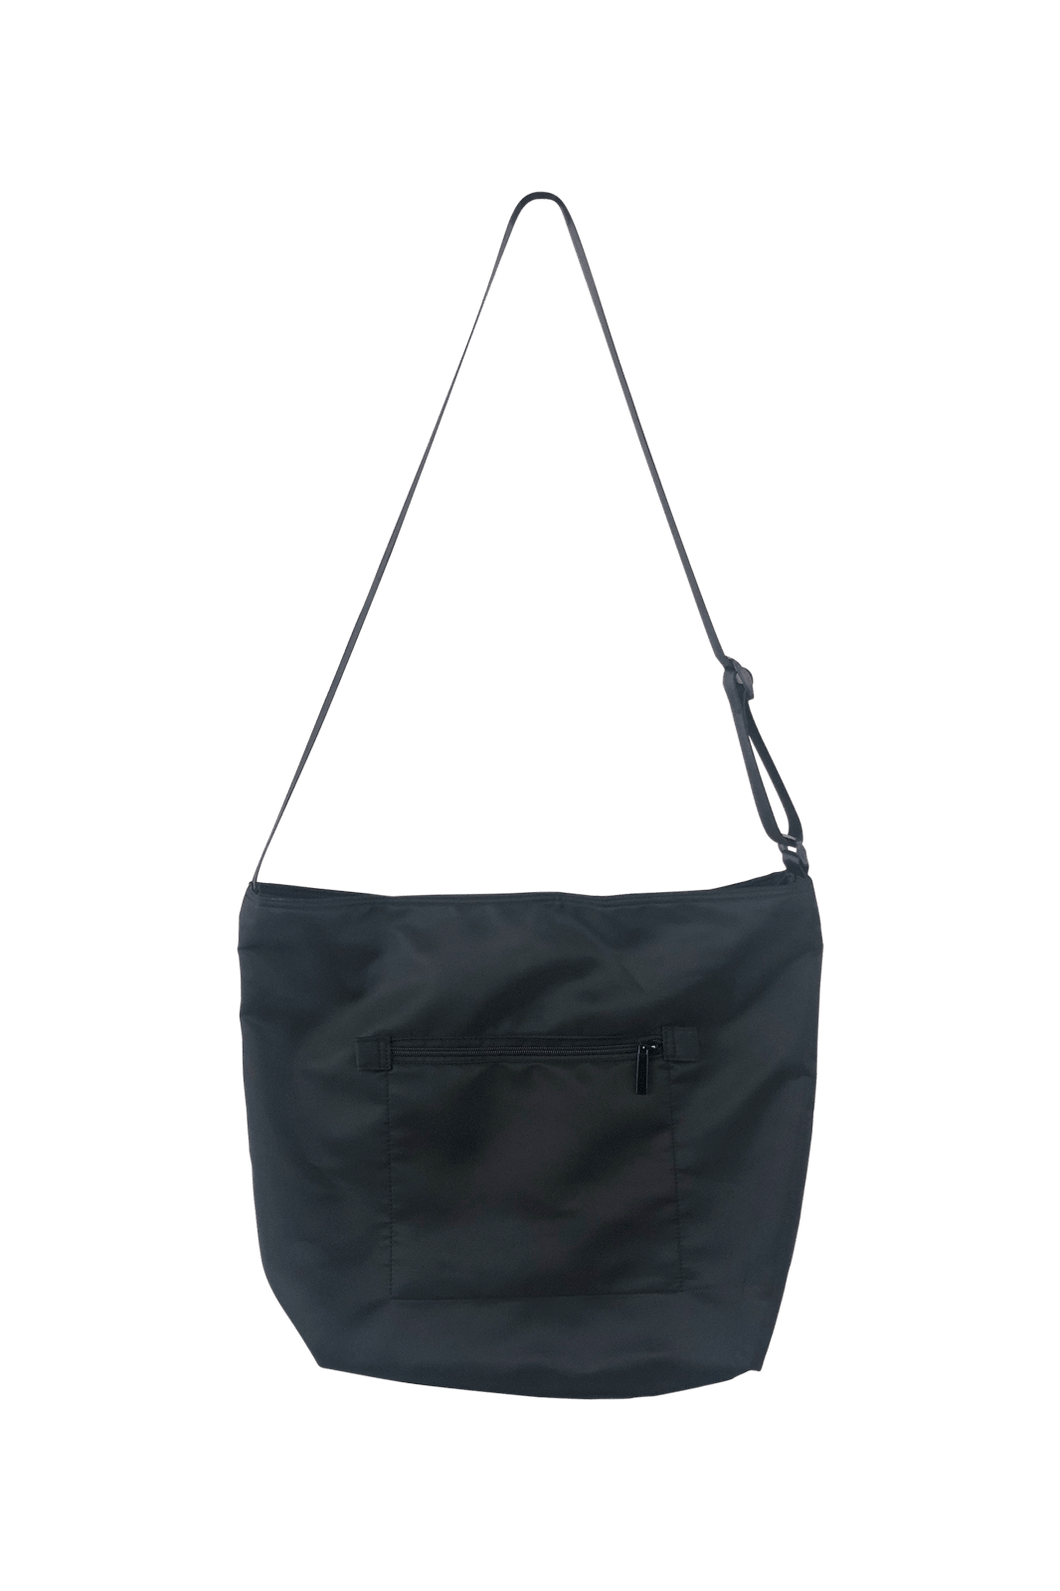 Large black nylon messenger bag